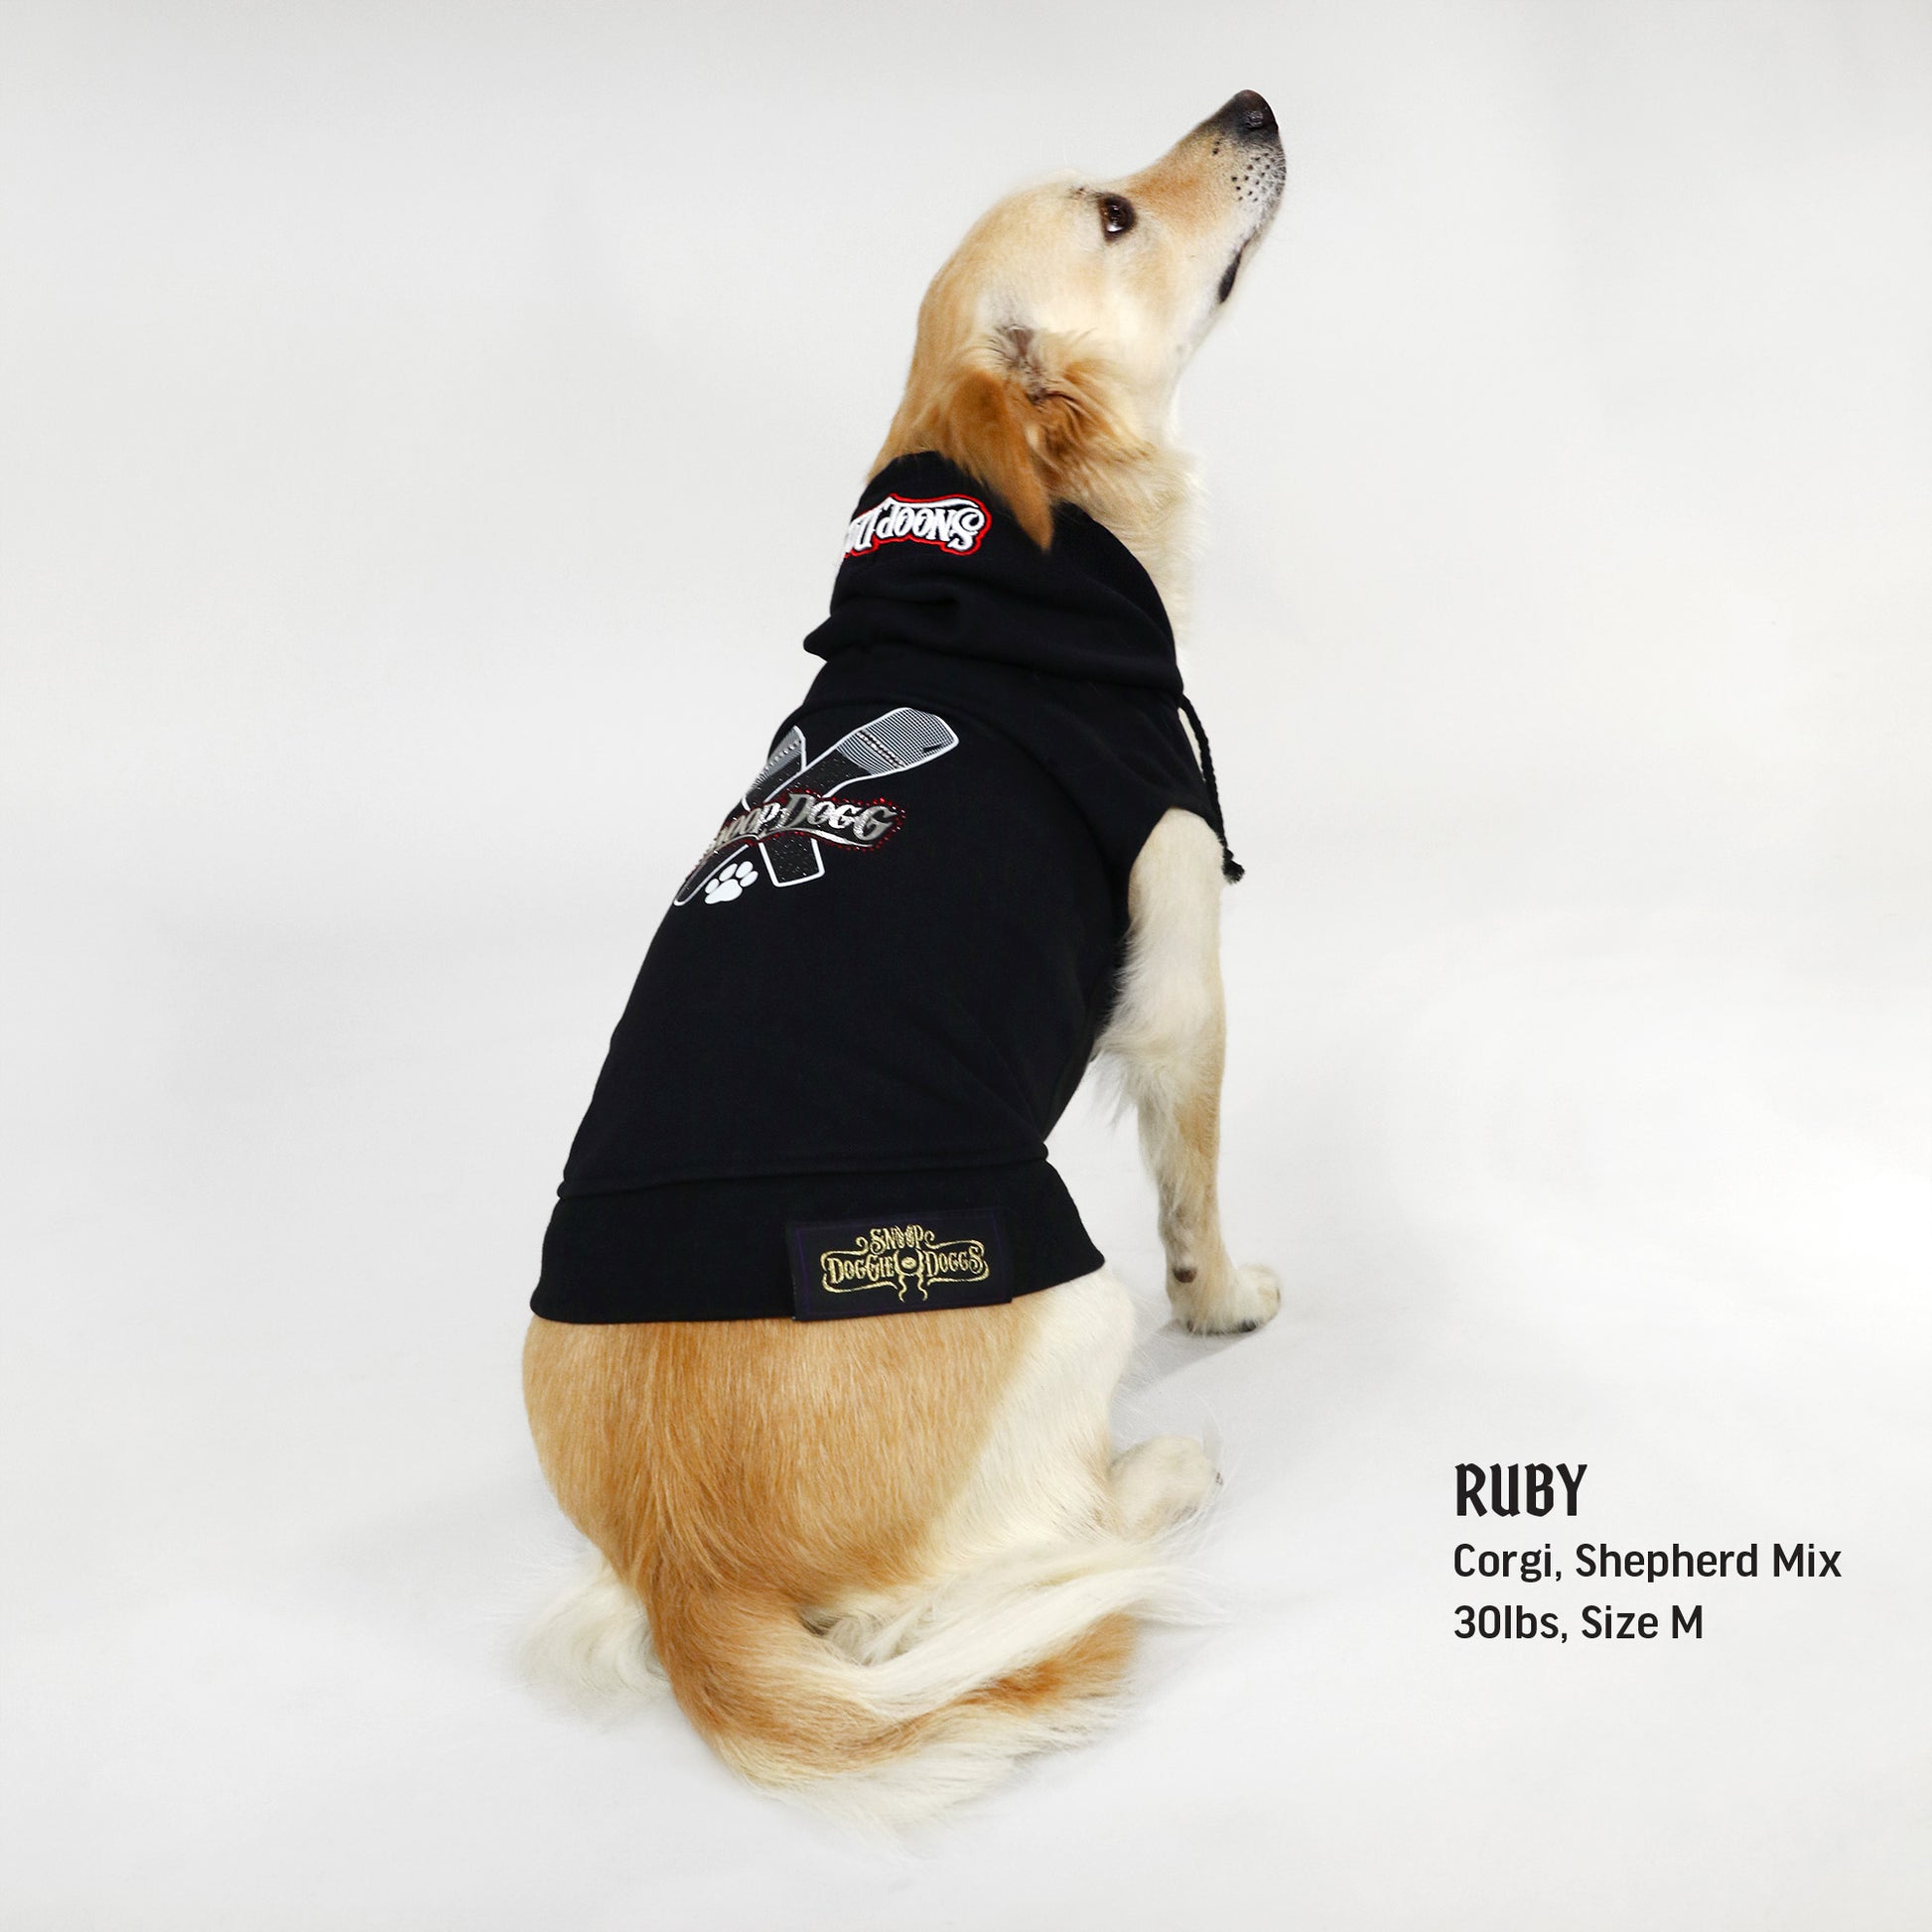 Ruby the Corgi, Shepherd Mix wearing the Mic Drop Deluxe Pet Hoodie in size Medium.